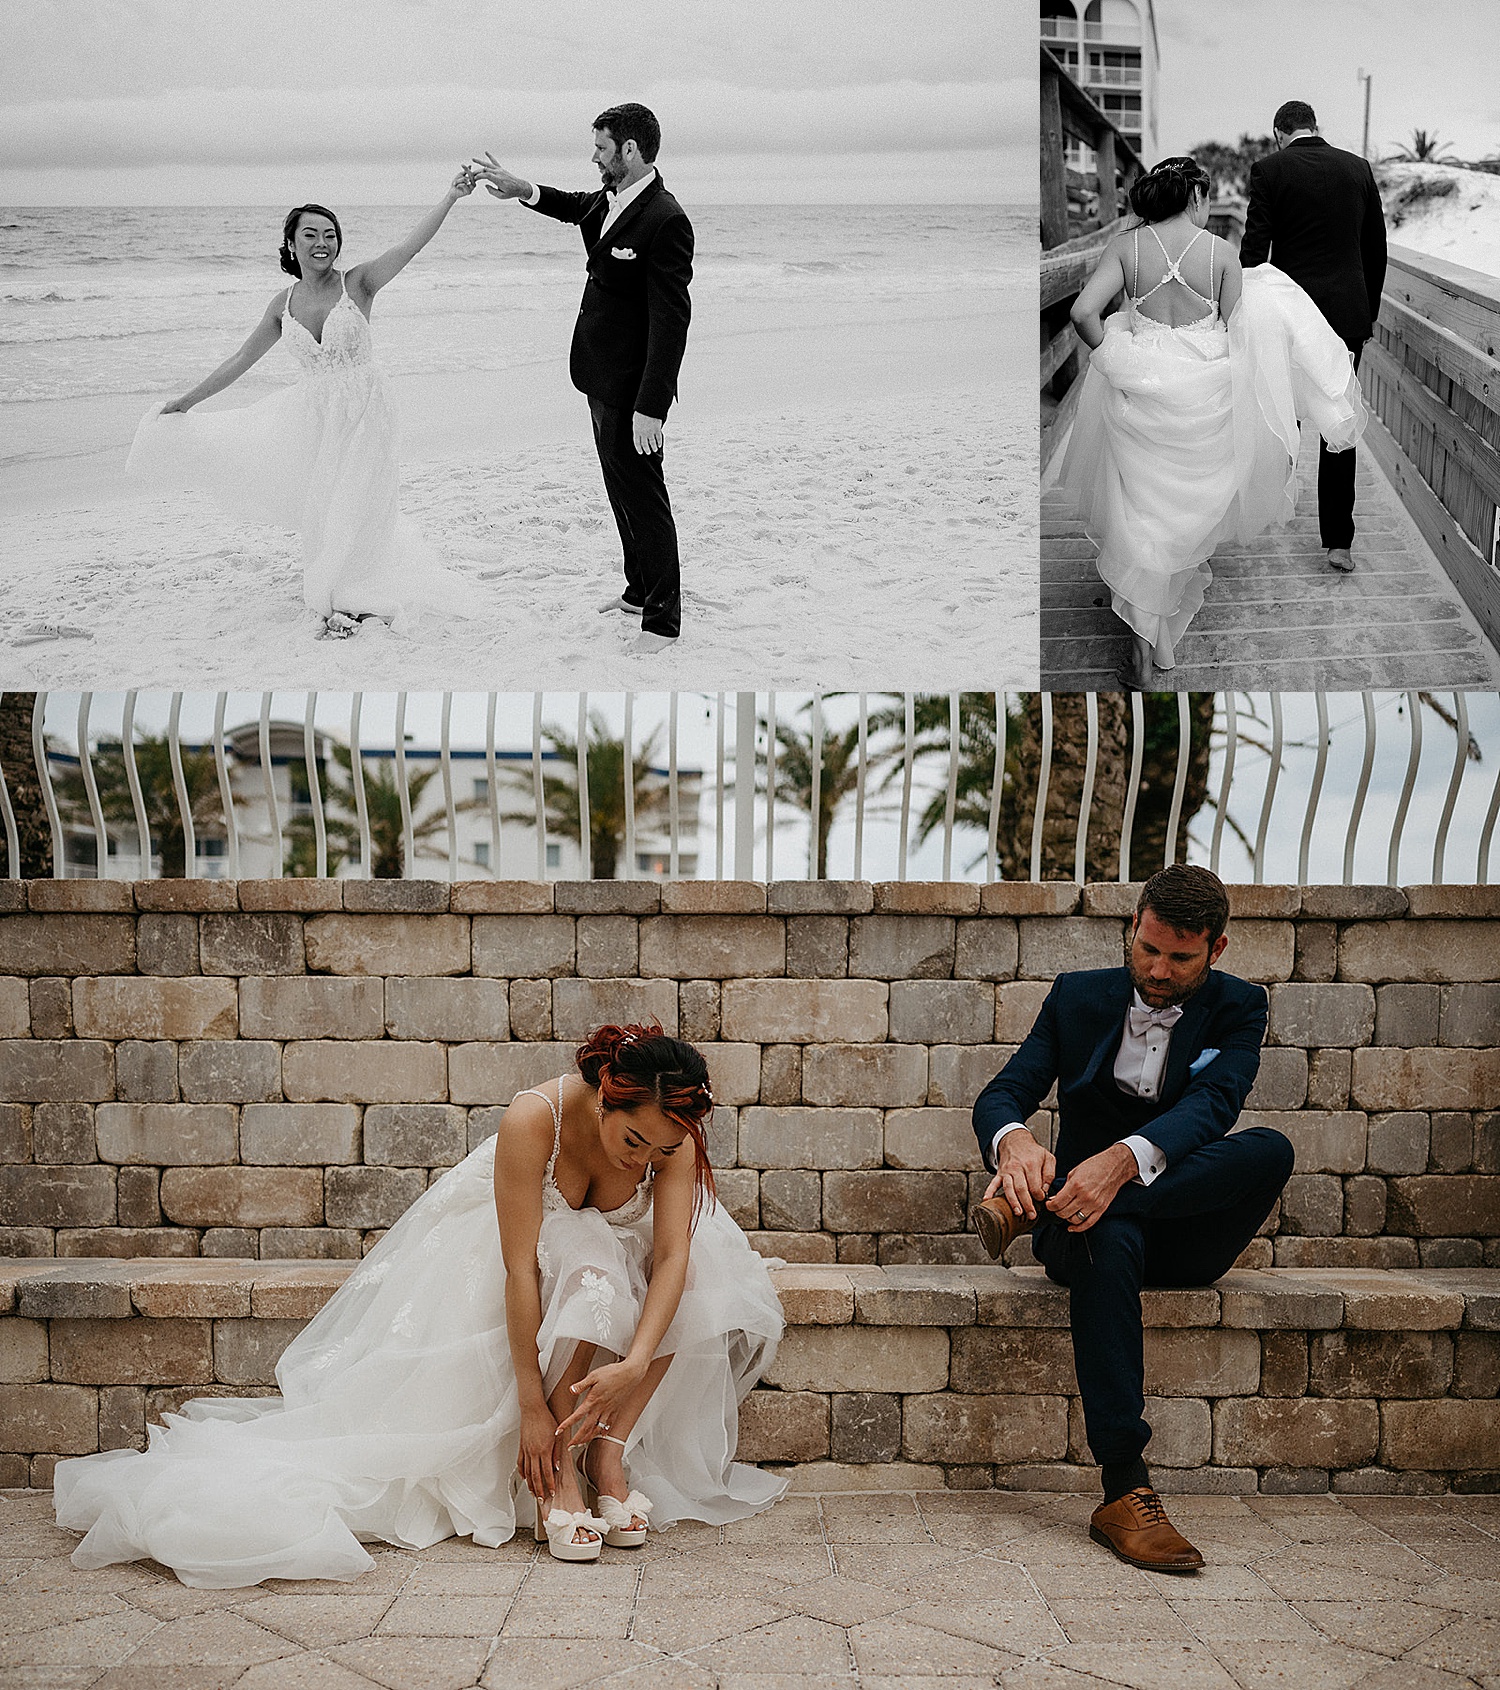 Groom twirls bride on the beach after wedding ceremony walking barefoot